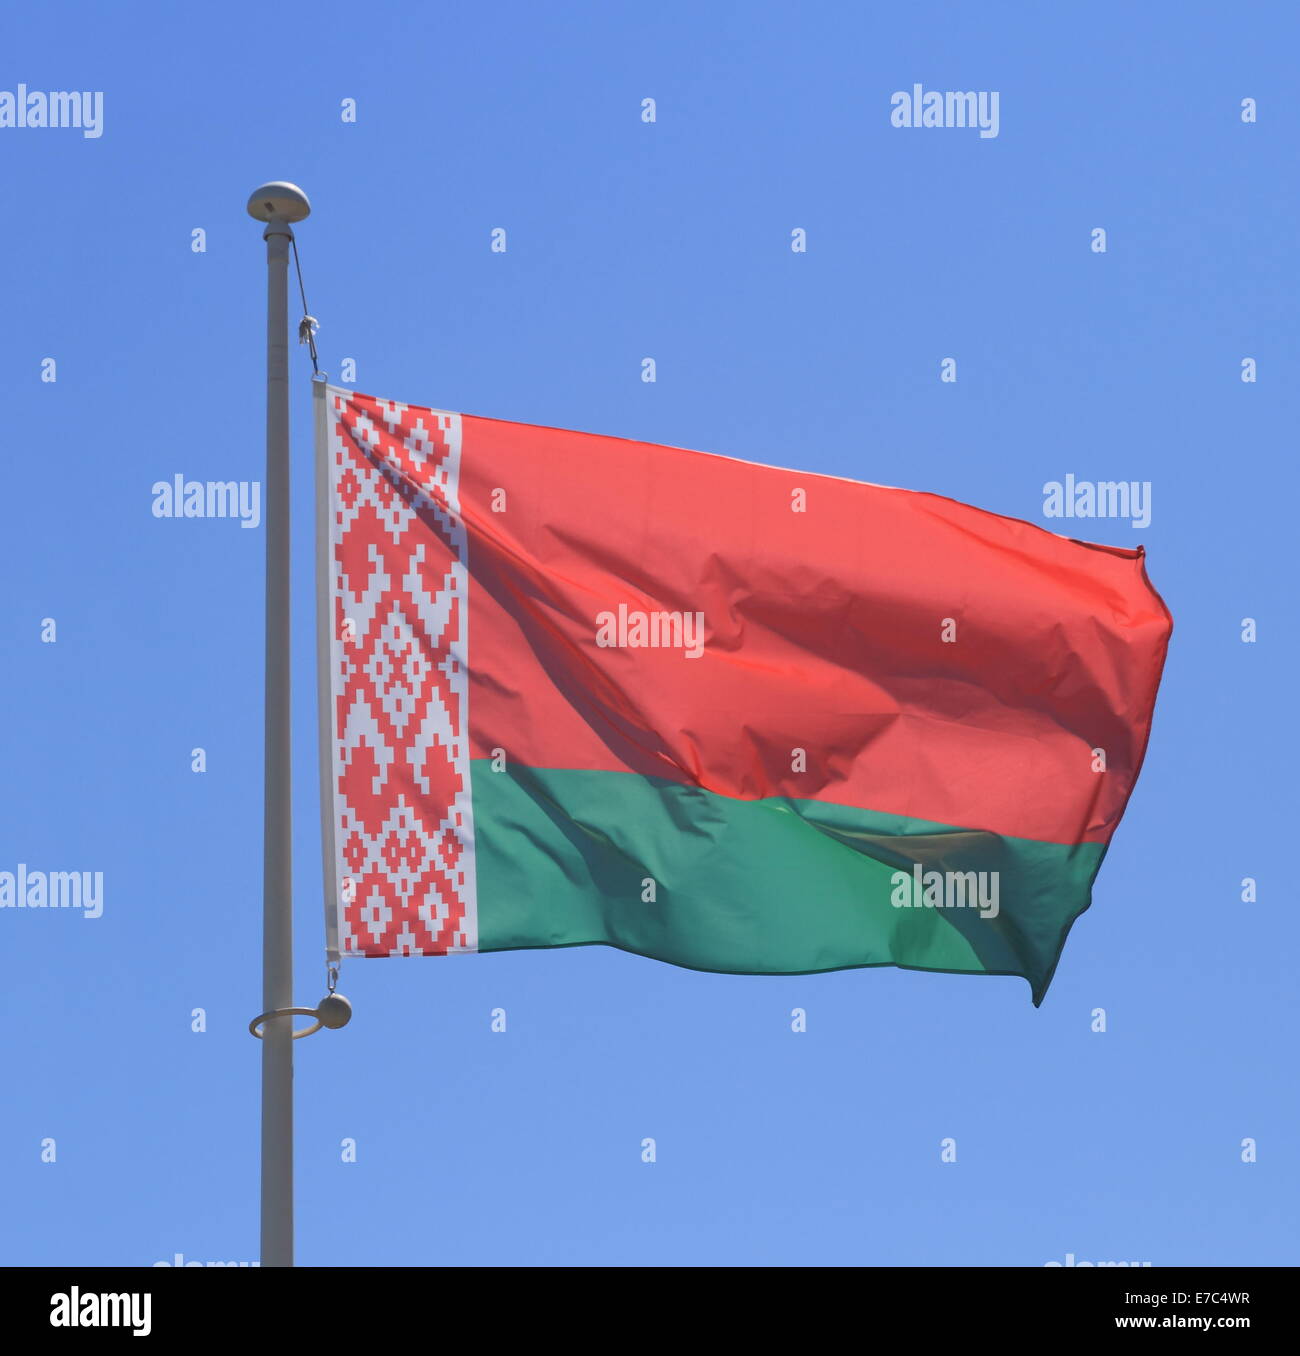 Belarus flag on blue sky, close up Stock Photo